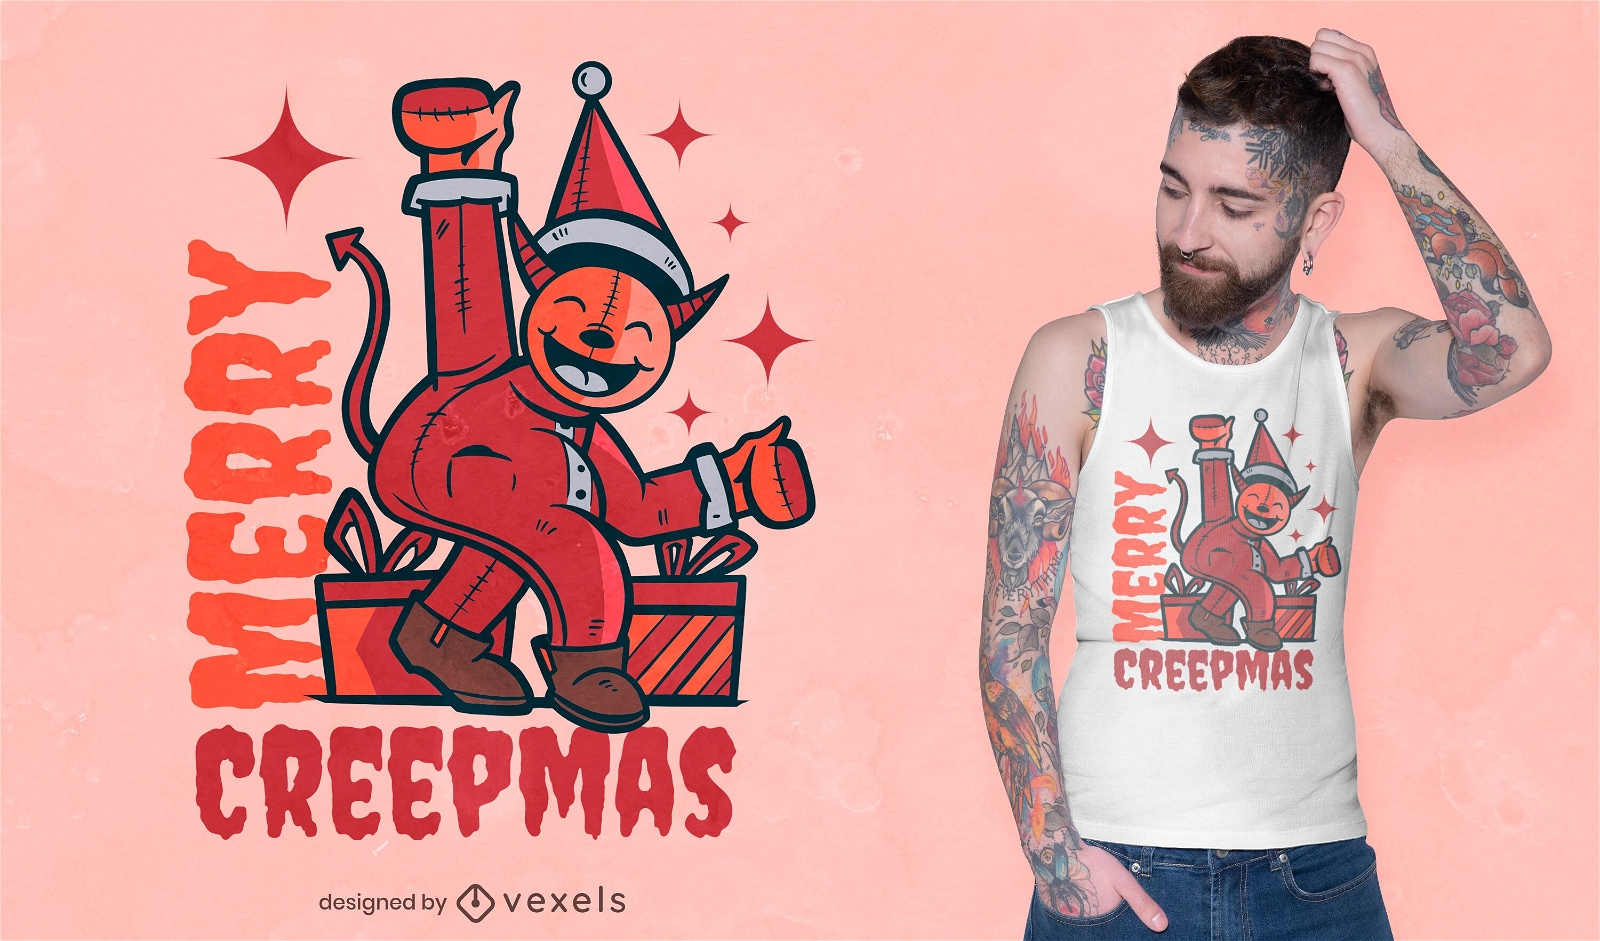 Merry creepmas t-shirt design